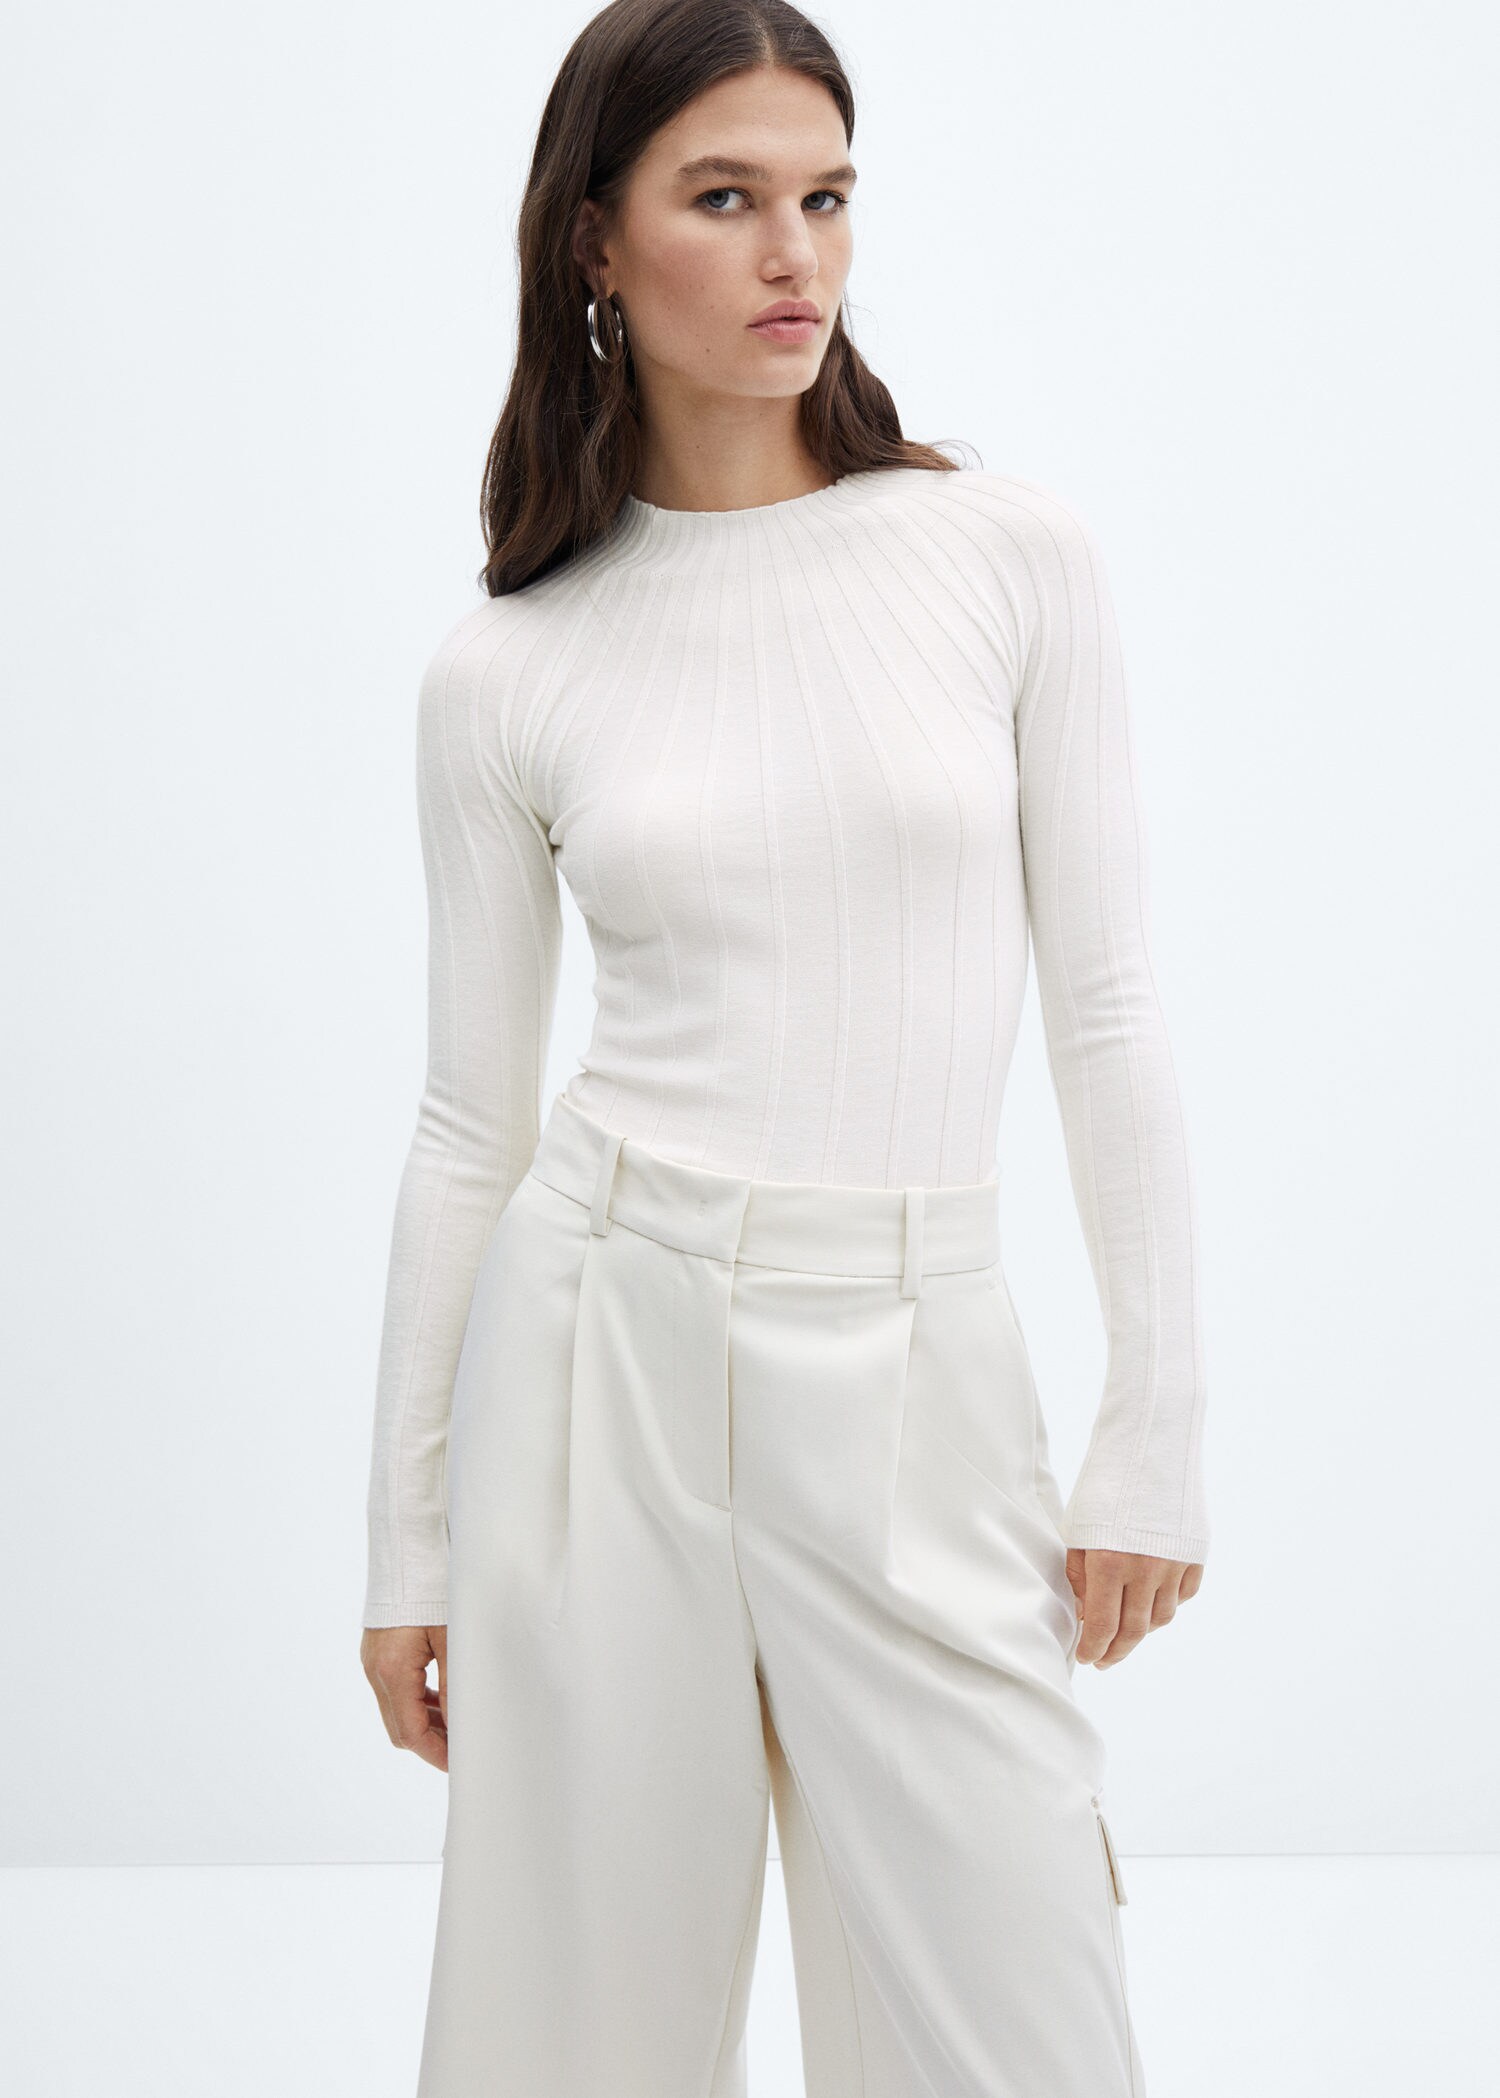 Zara Women's Ribbed Knit Sweater Cream High Collar Long Sleeve Raglan  Pullover s